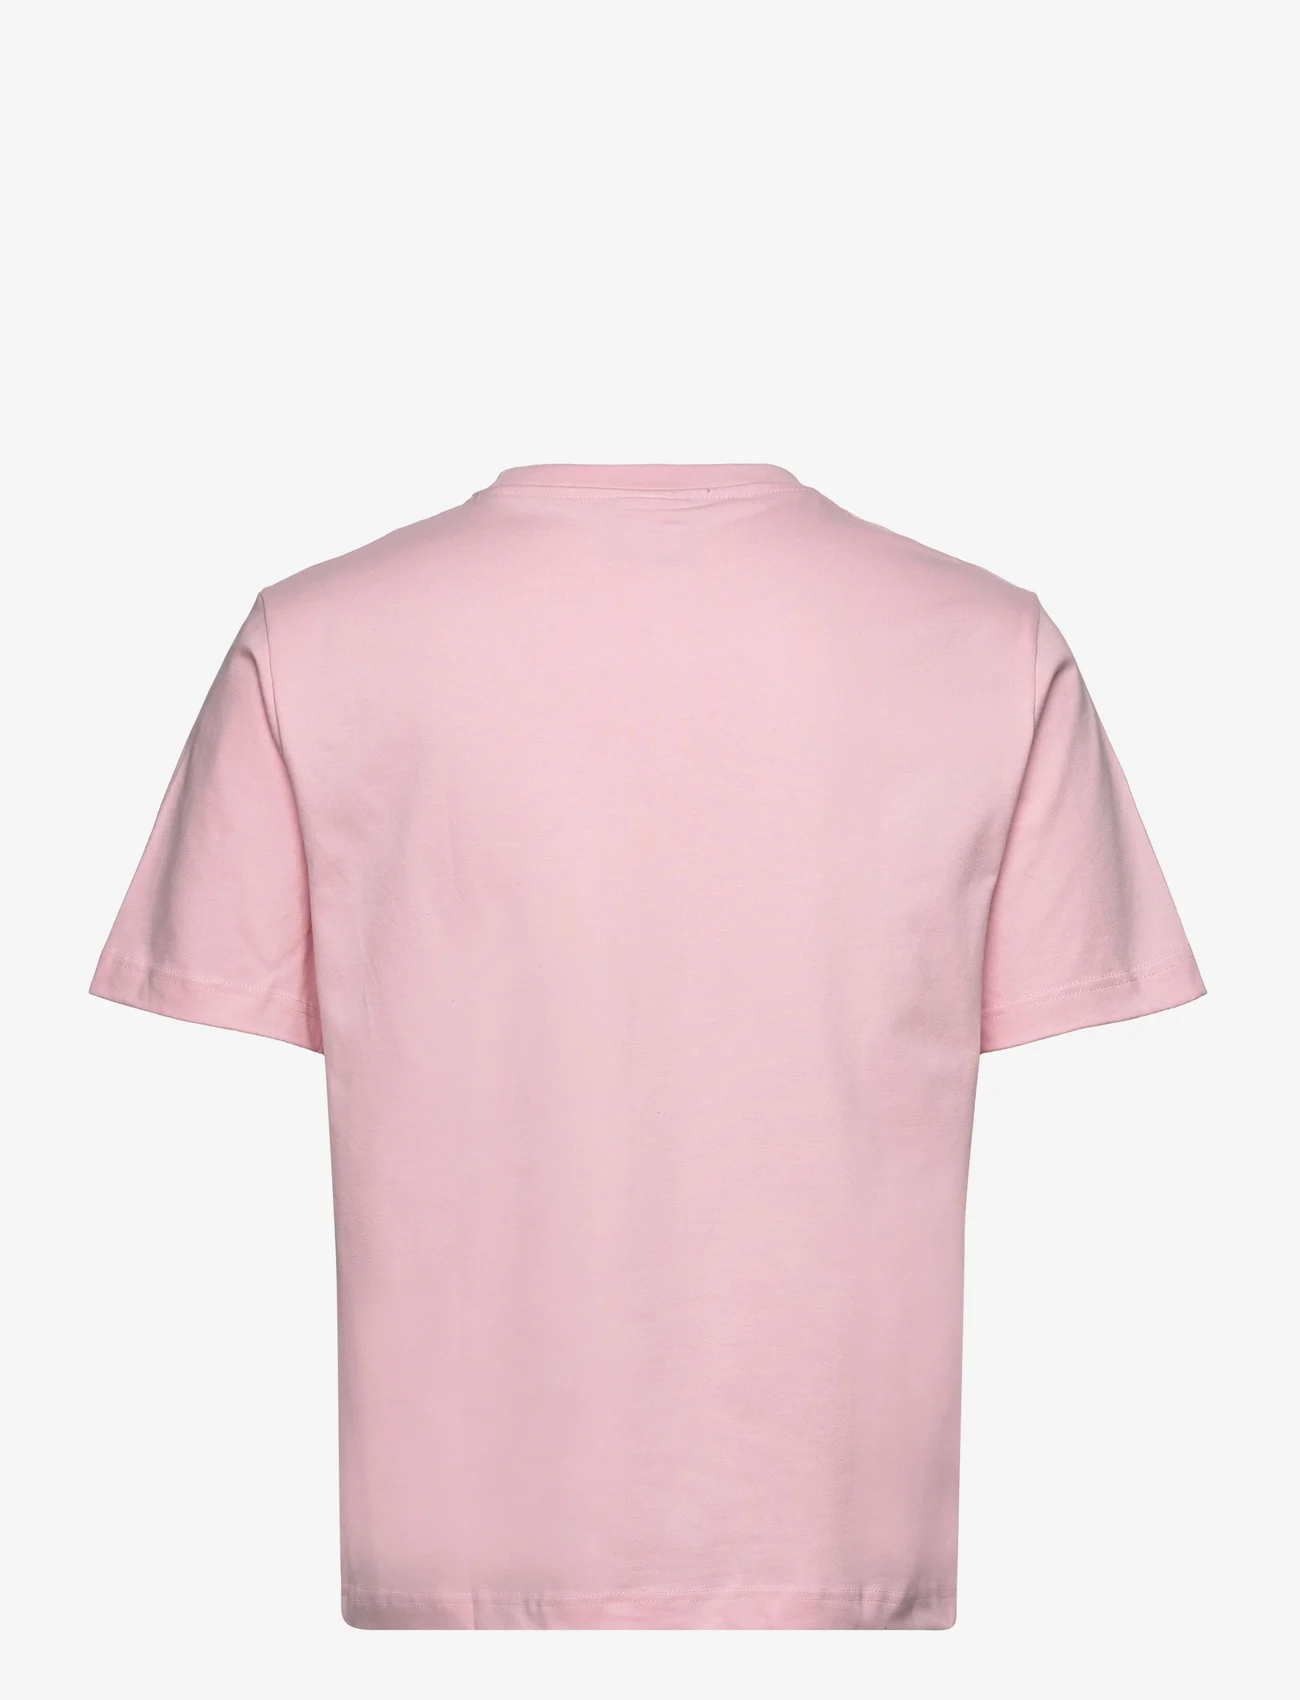 HOLZWEILER - M. Hanger Tee - podstawowe koszulki - lt. pink - 1